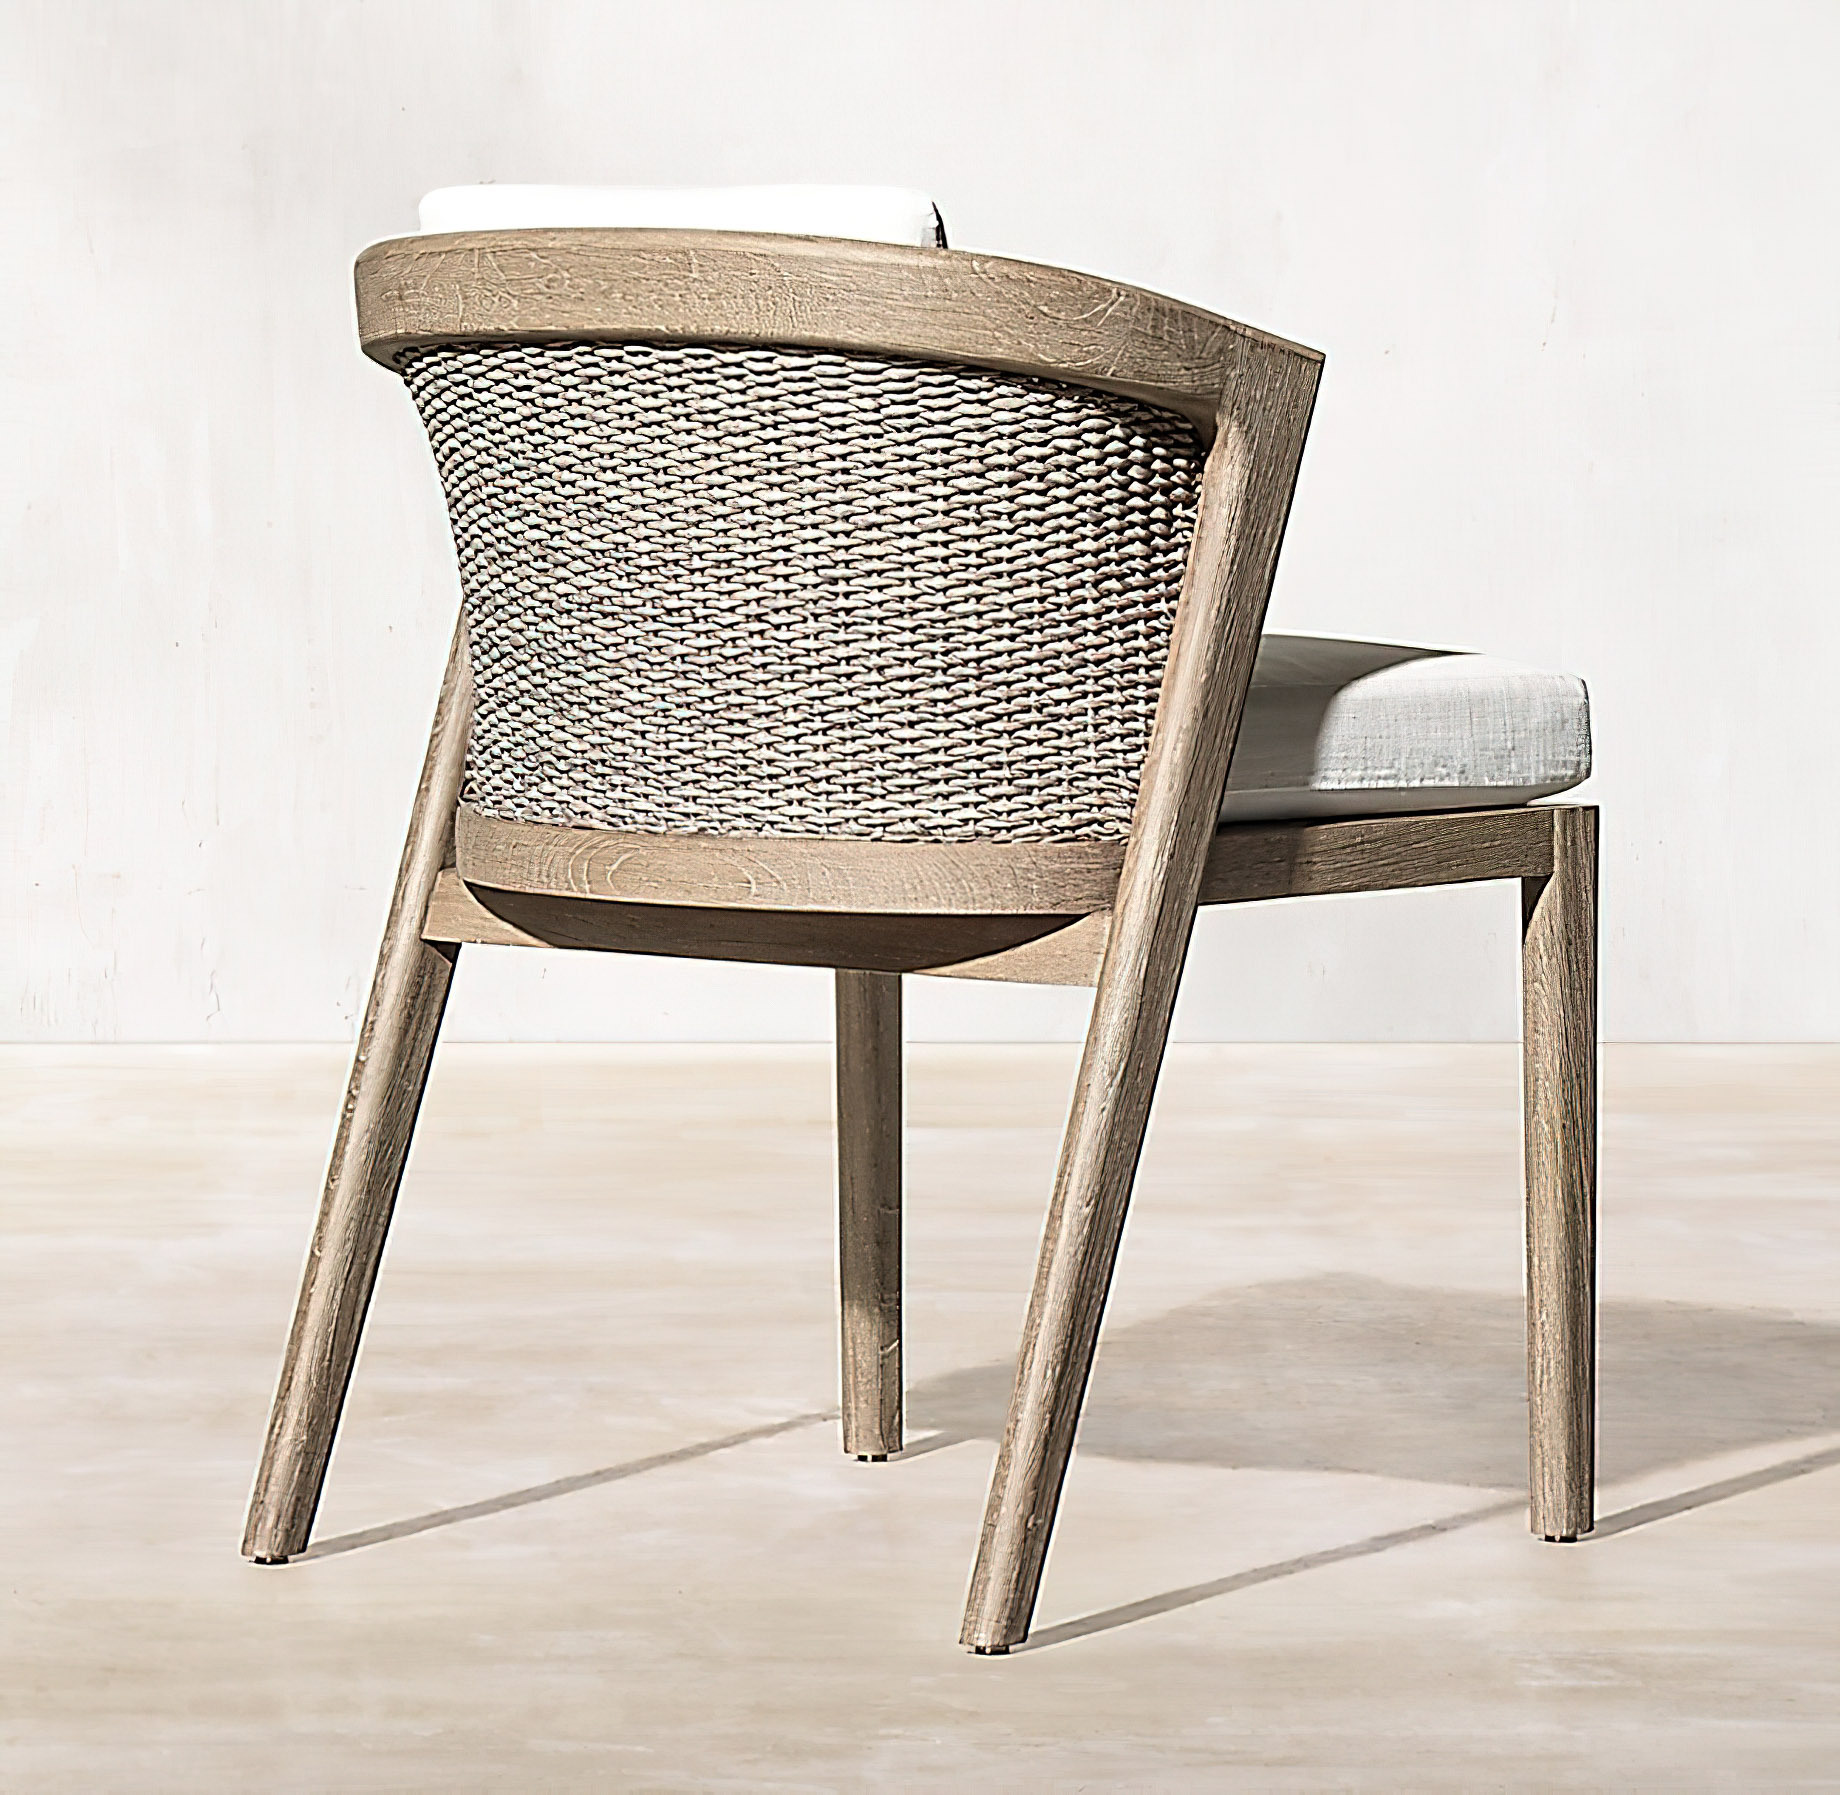 Malta Teak Collection Outdoor Furniture Design for RH – Ramon Esteve – Malta Teak Side Chair